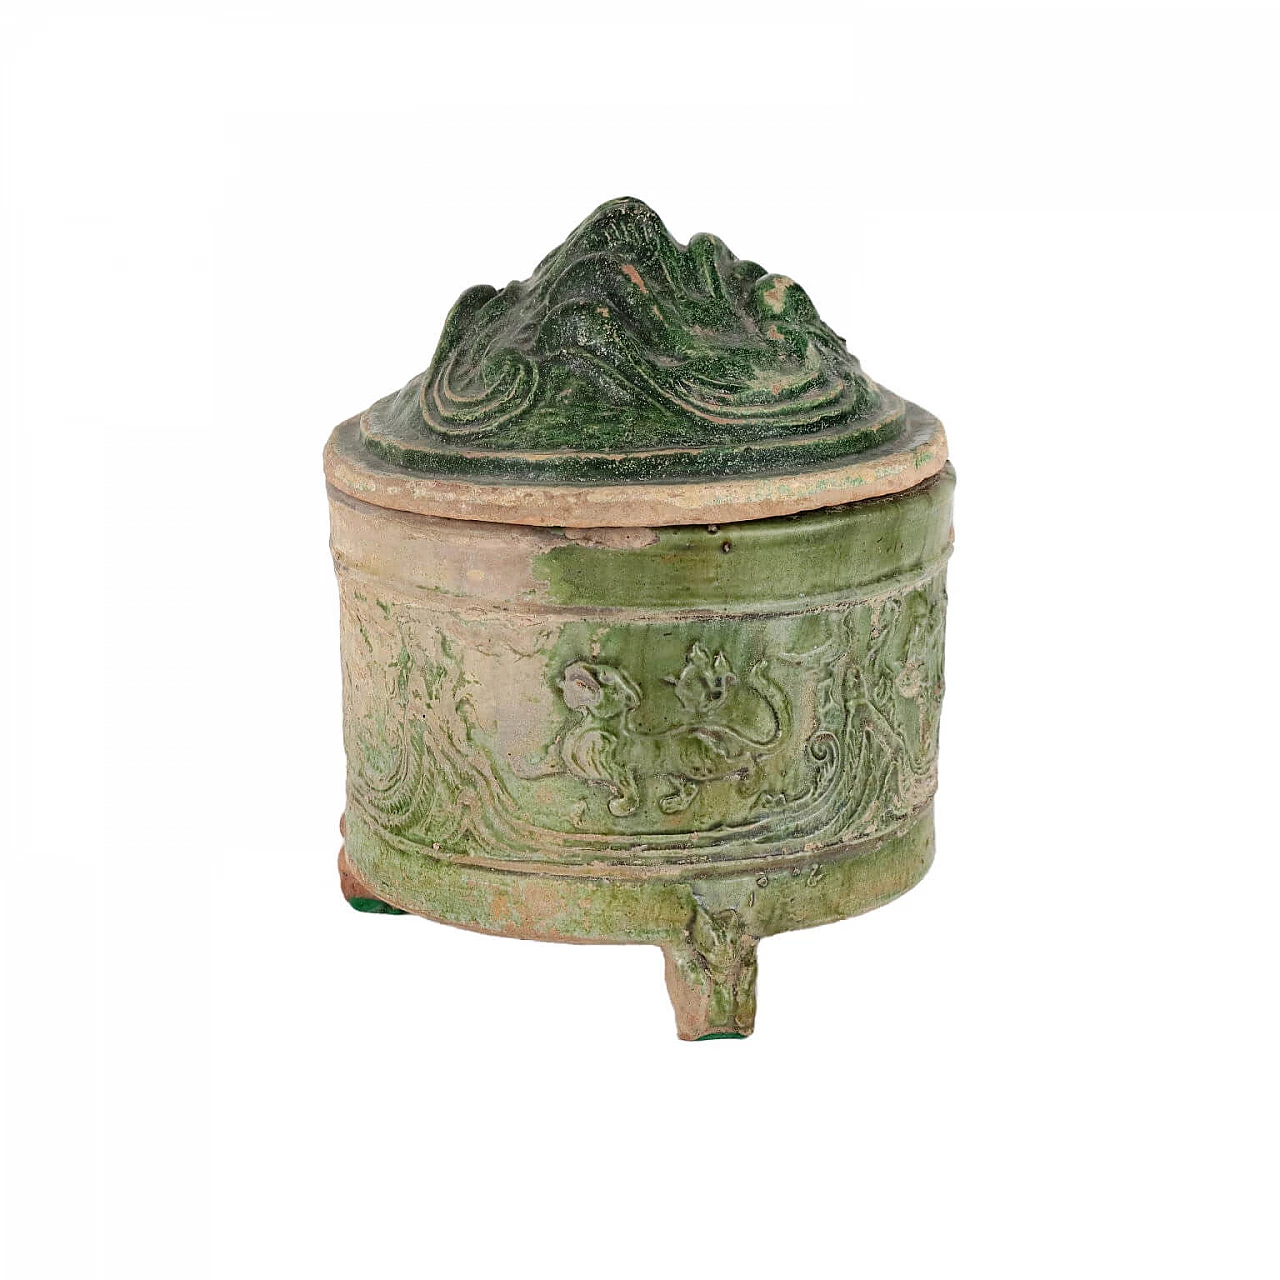 Giara cinese in terracotta invetriata verde, periodo Han 1